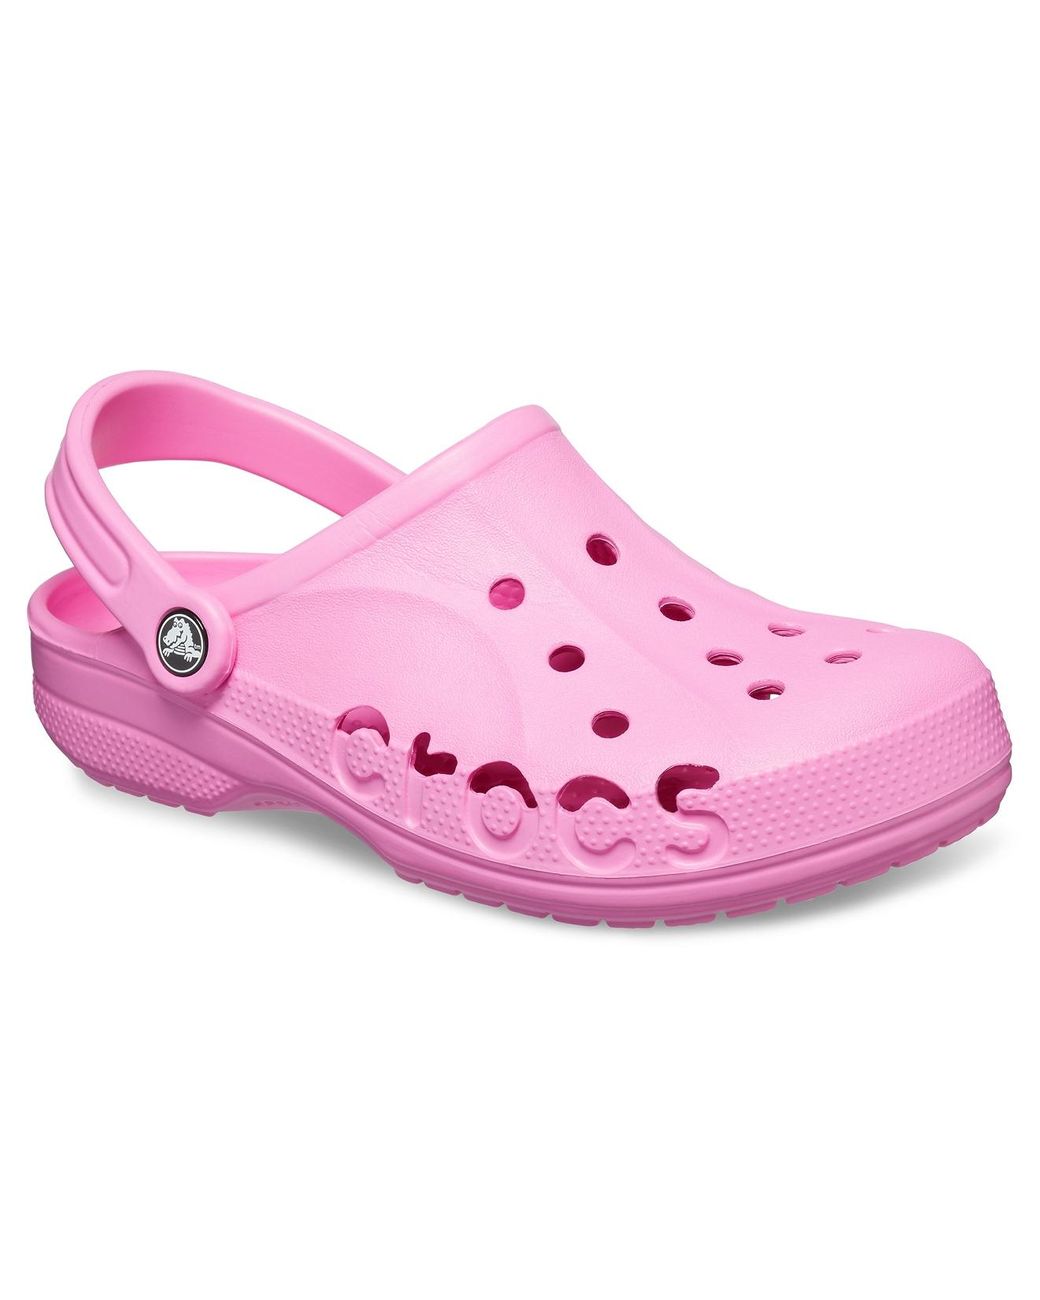 Crocs™ Baya Clog in Pink - Lyst